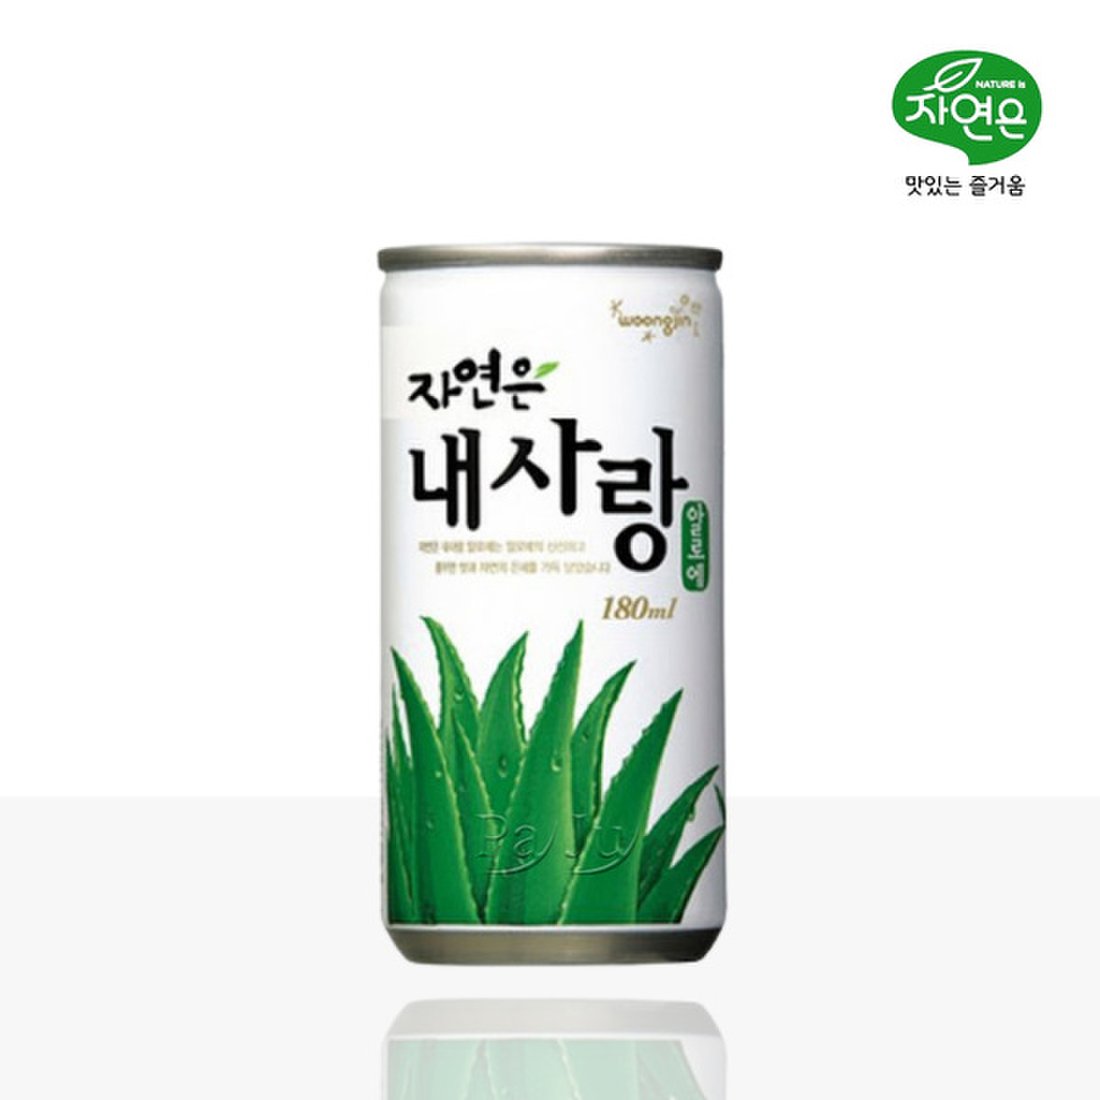 Aloe Juice(can) 자연은 알로에 Can 180ml